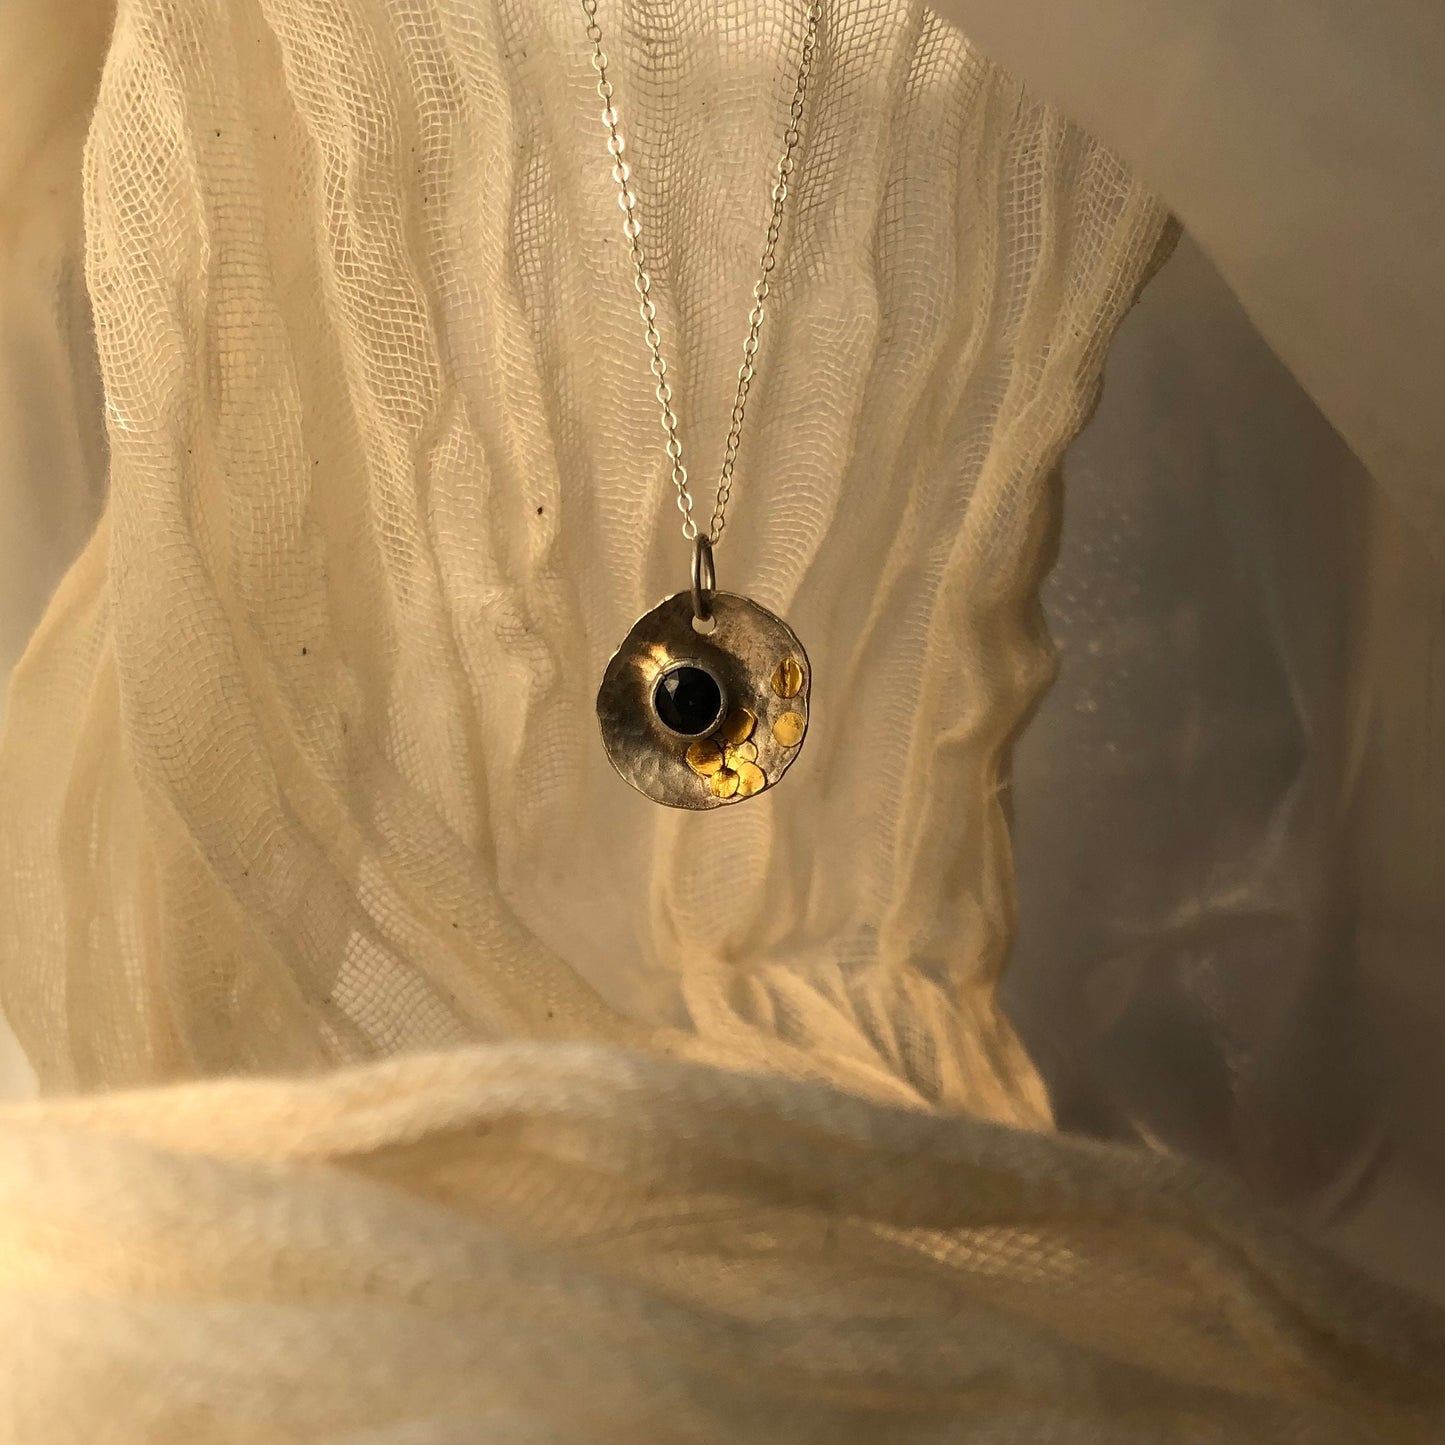 Dark blue natural sapphire "Solar Eclipse" pendant in argentium silver and 24 karat gold, artisan made sapphire pendant